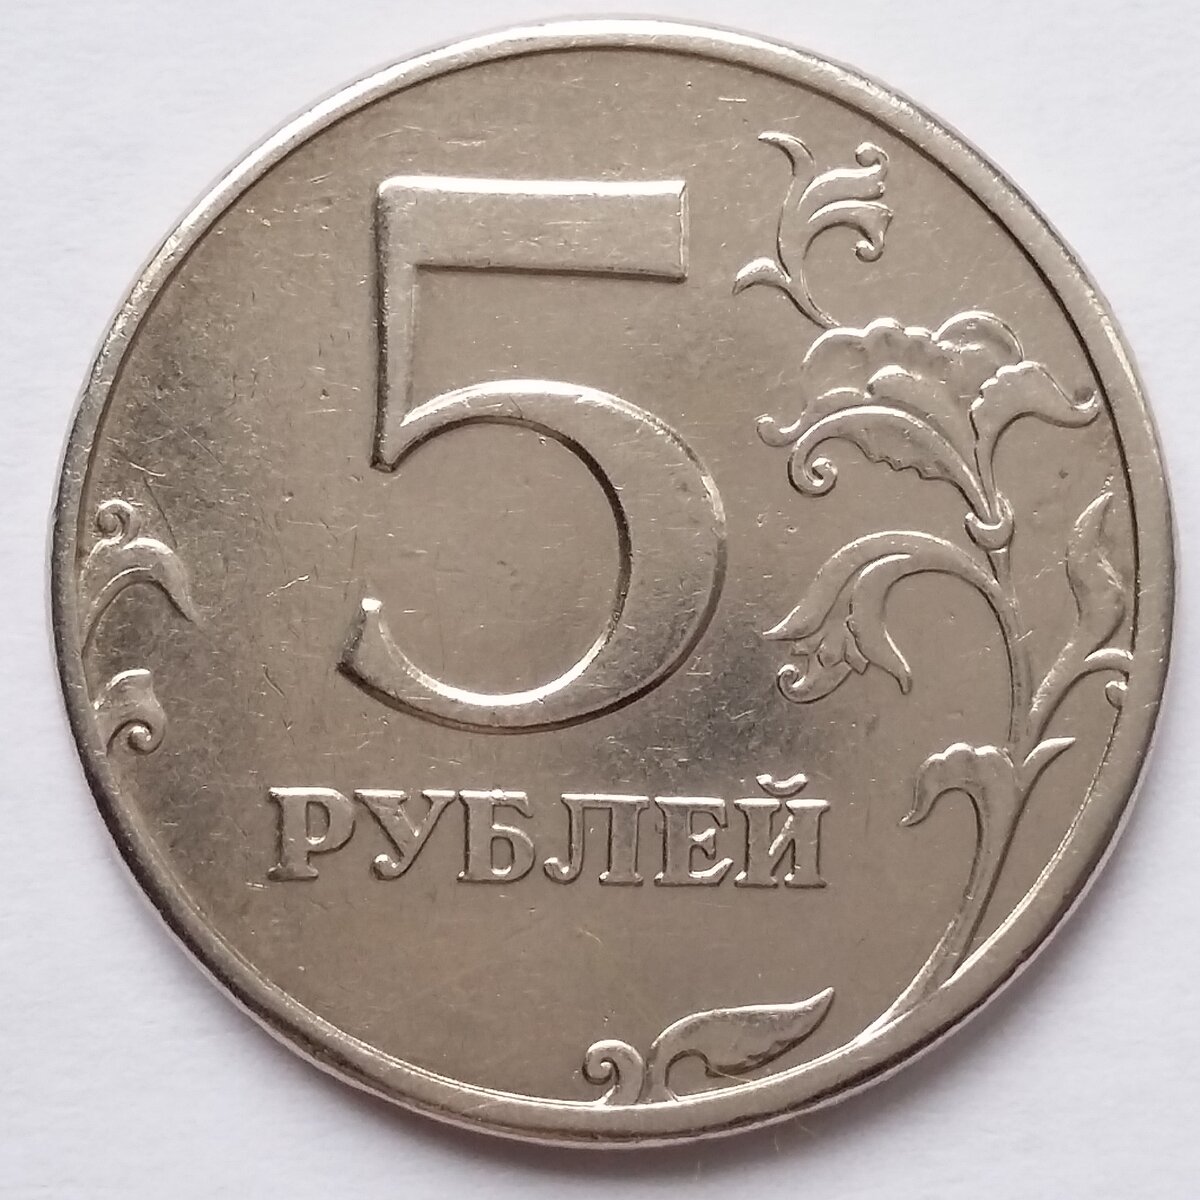 5 Рублевая монета 1997